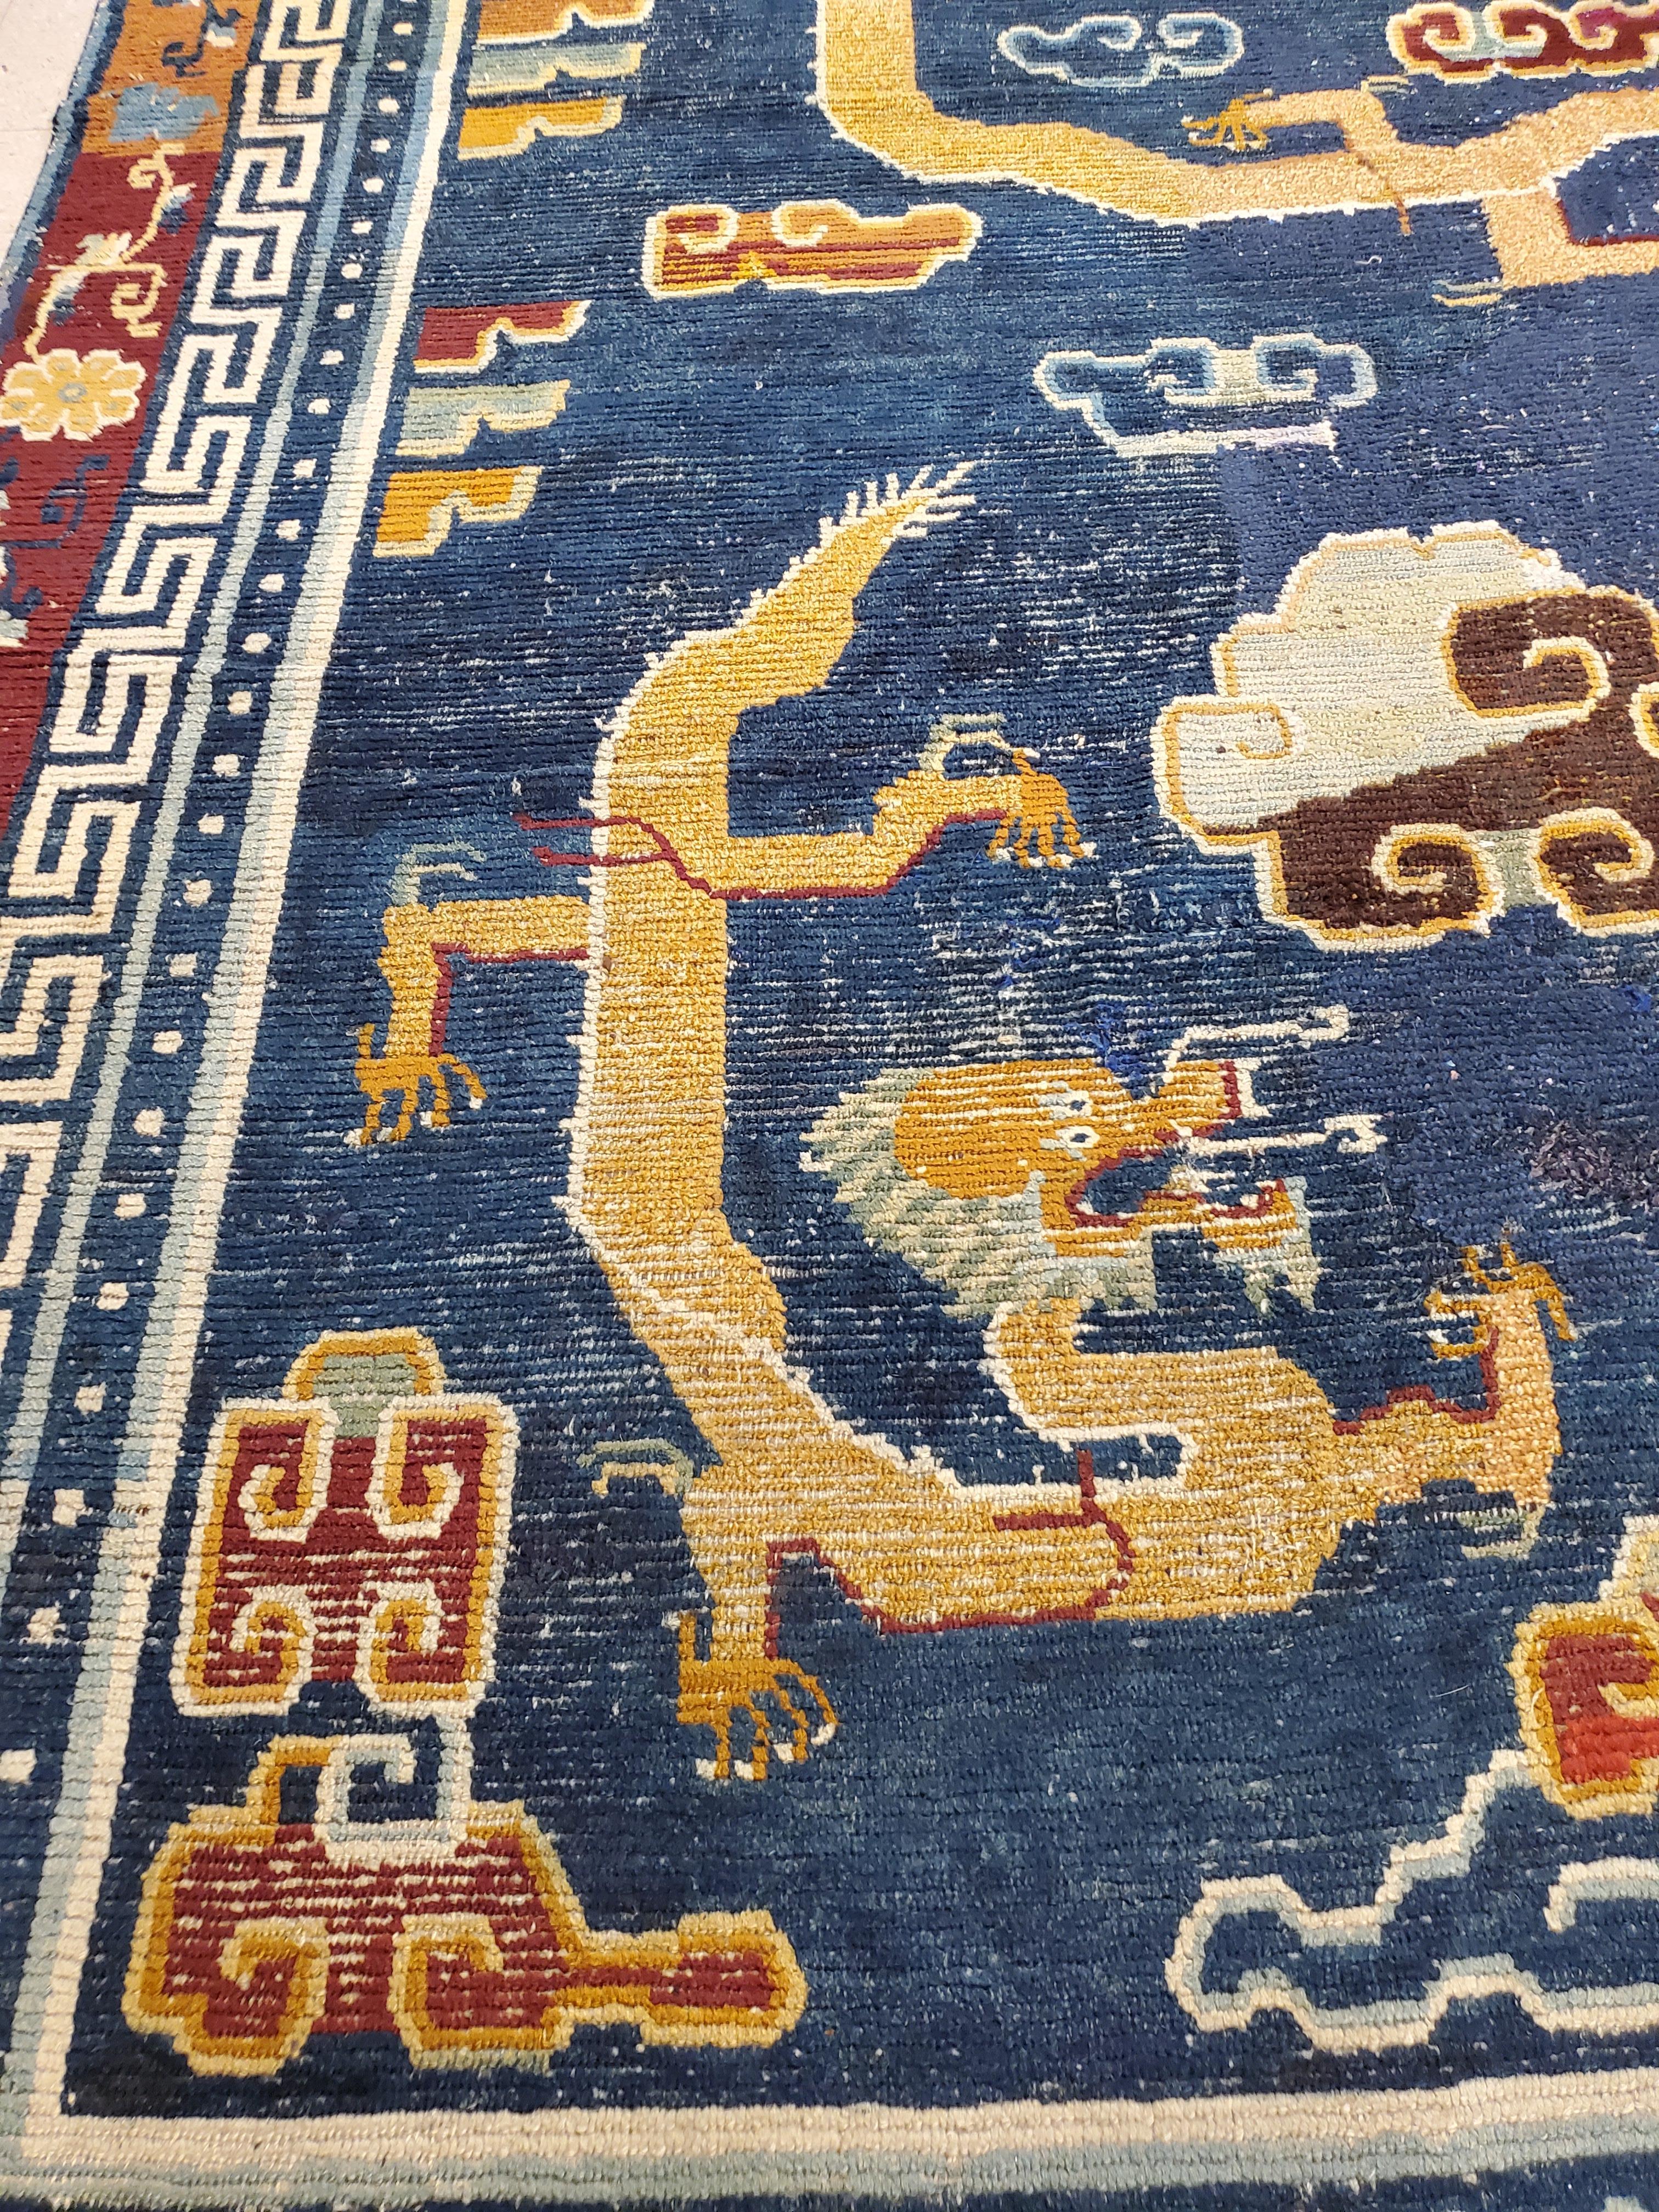 Antique Tibetan Carpet, Circa 1880 Handmade Oriental Rug, Blue, Gold, Tan, Cream 10